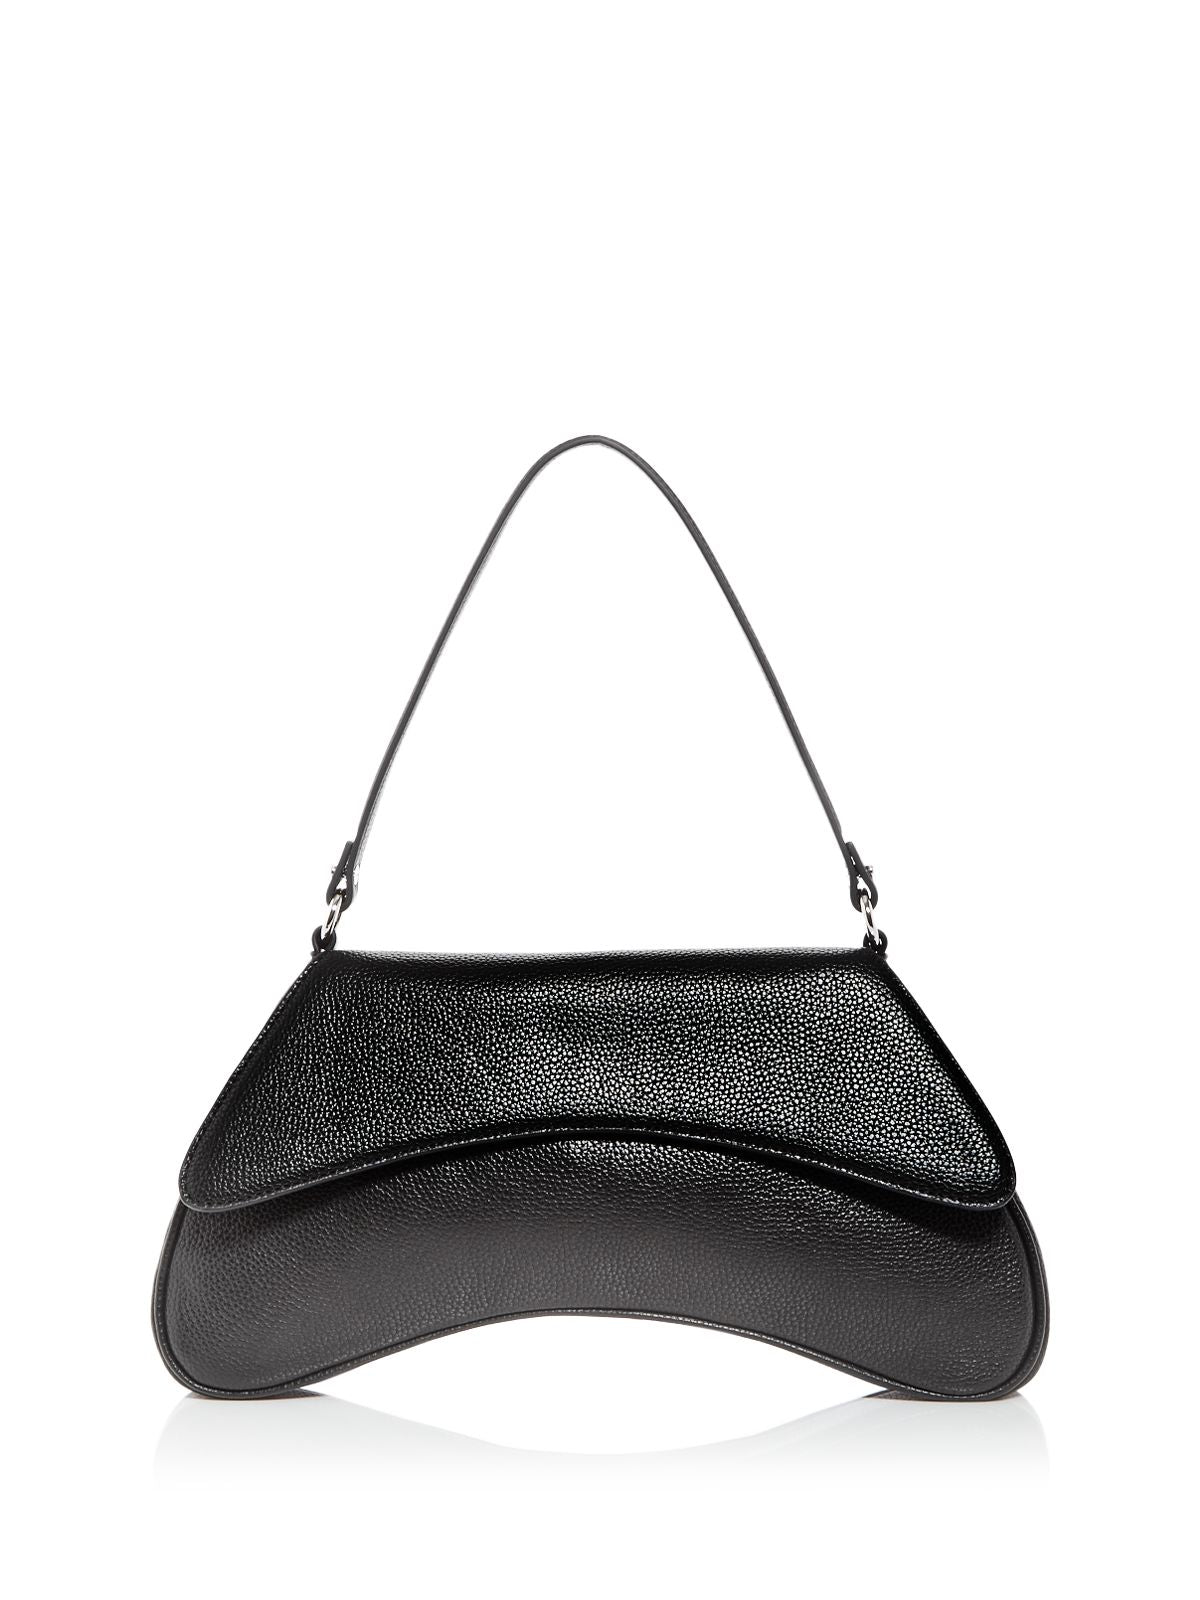 SIMON MILLER Women's Black Solid Single Strap Shoulder Bag